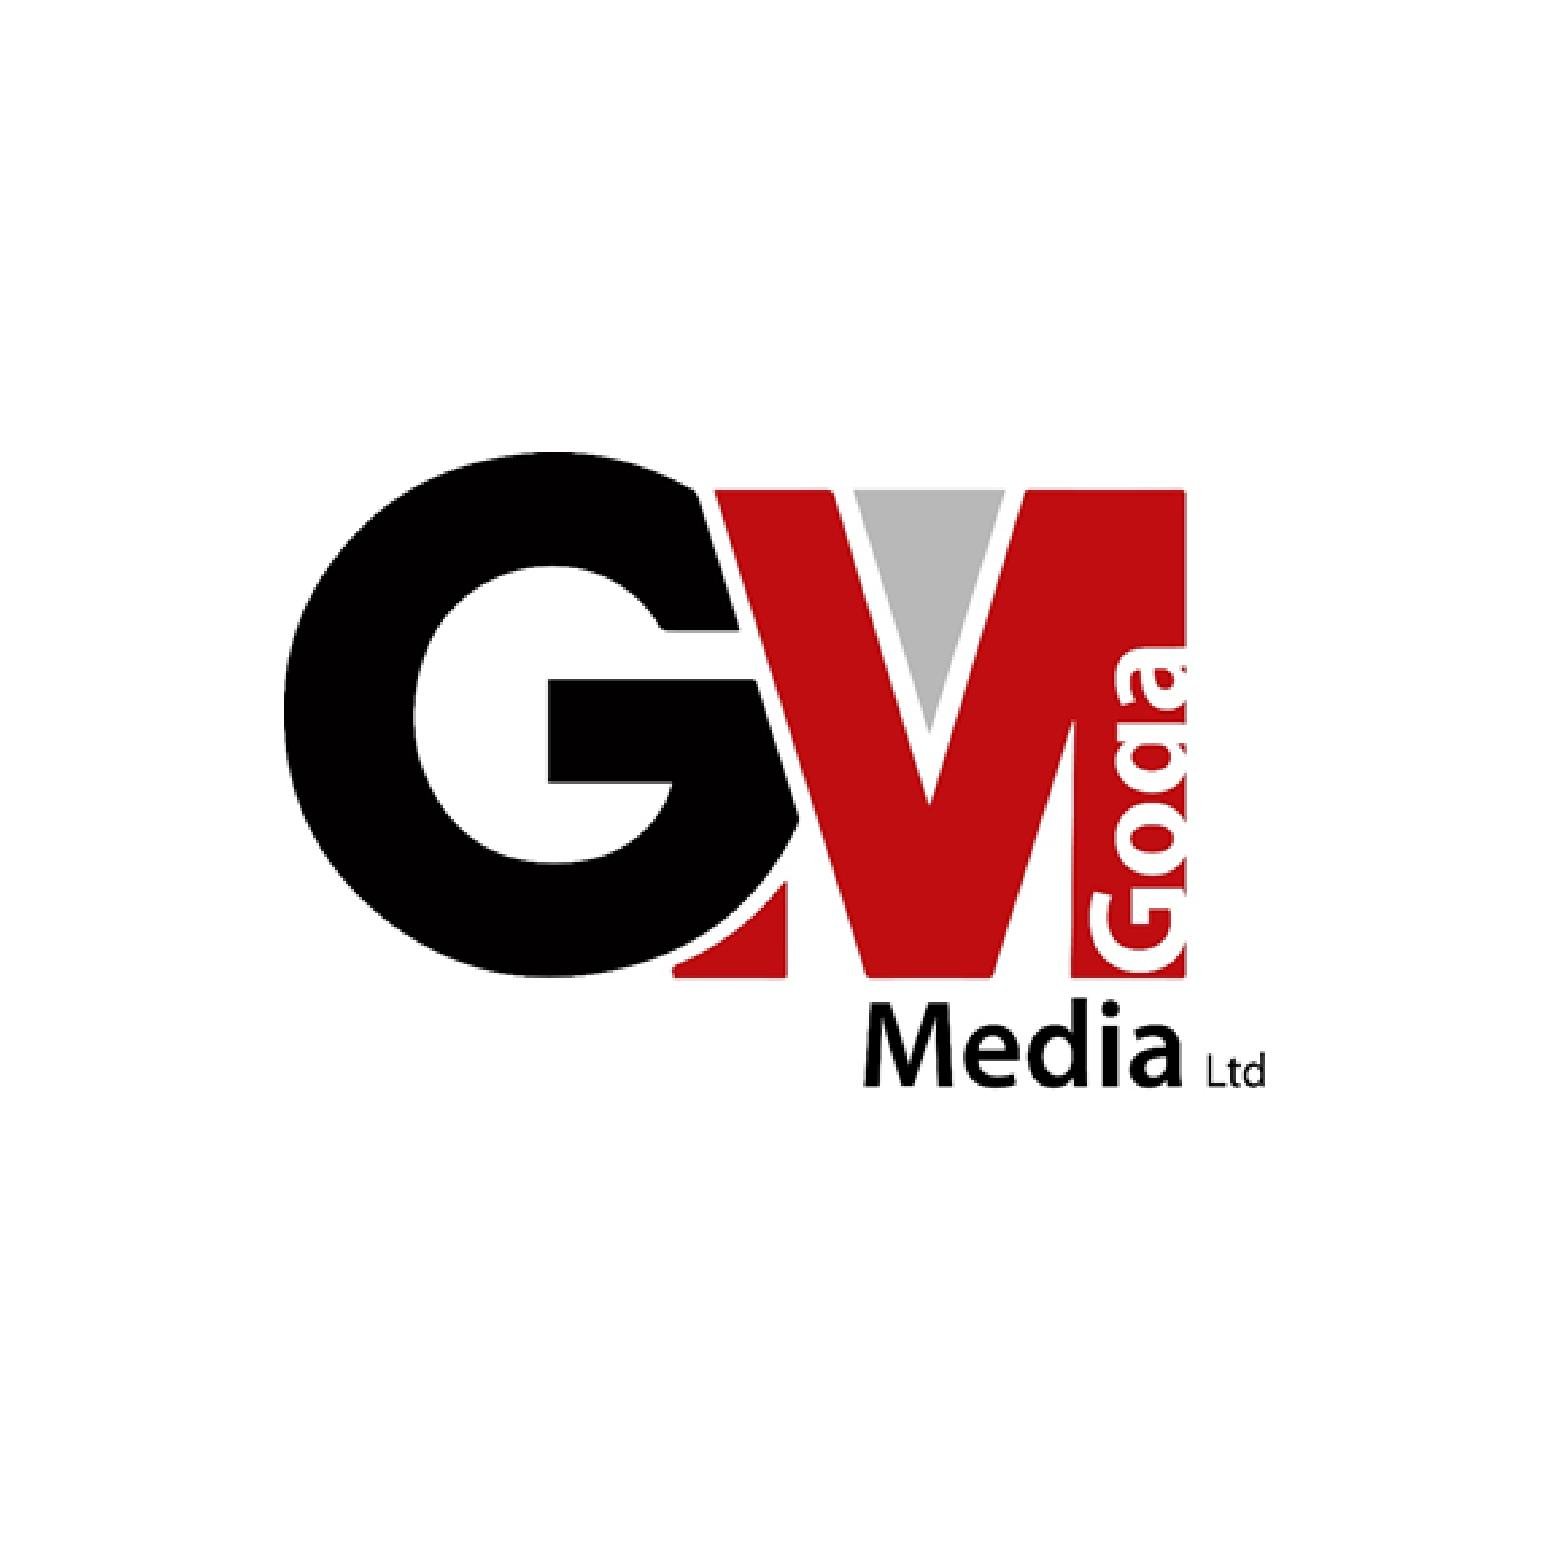 Goga Media Ltd